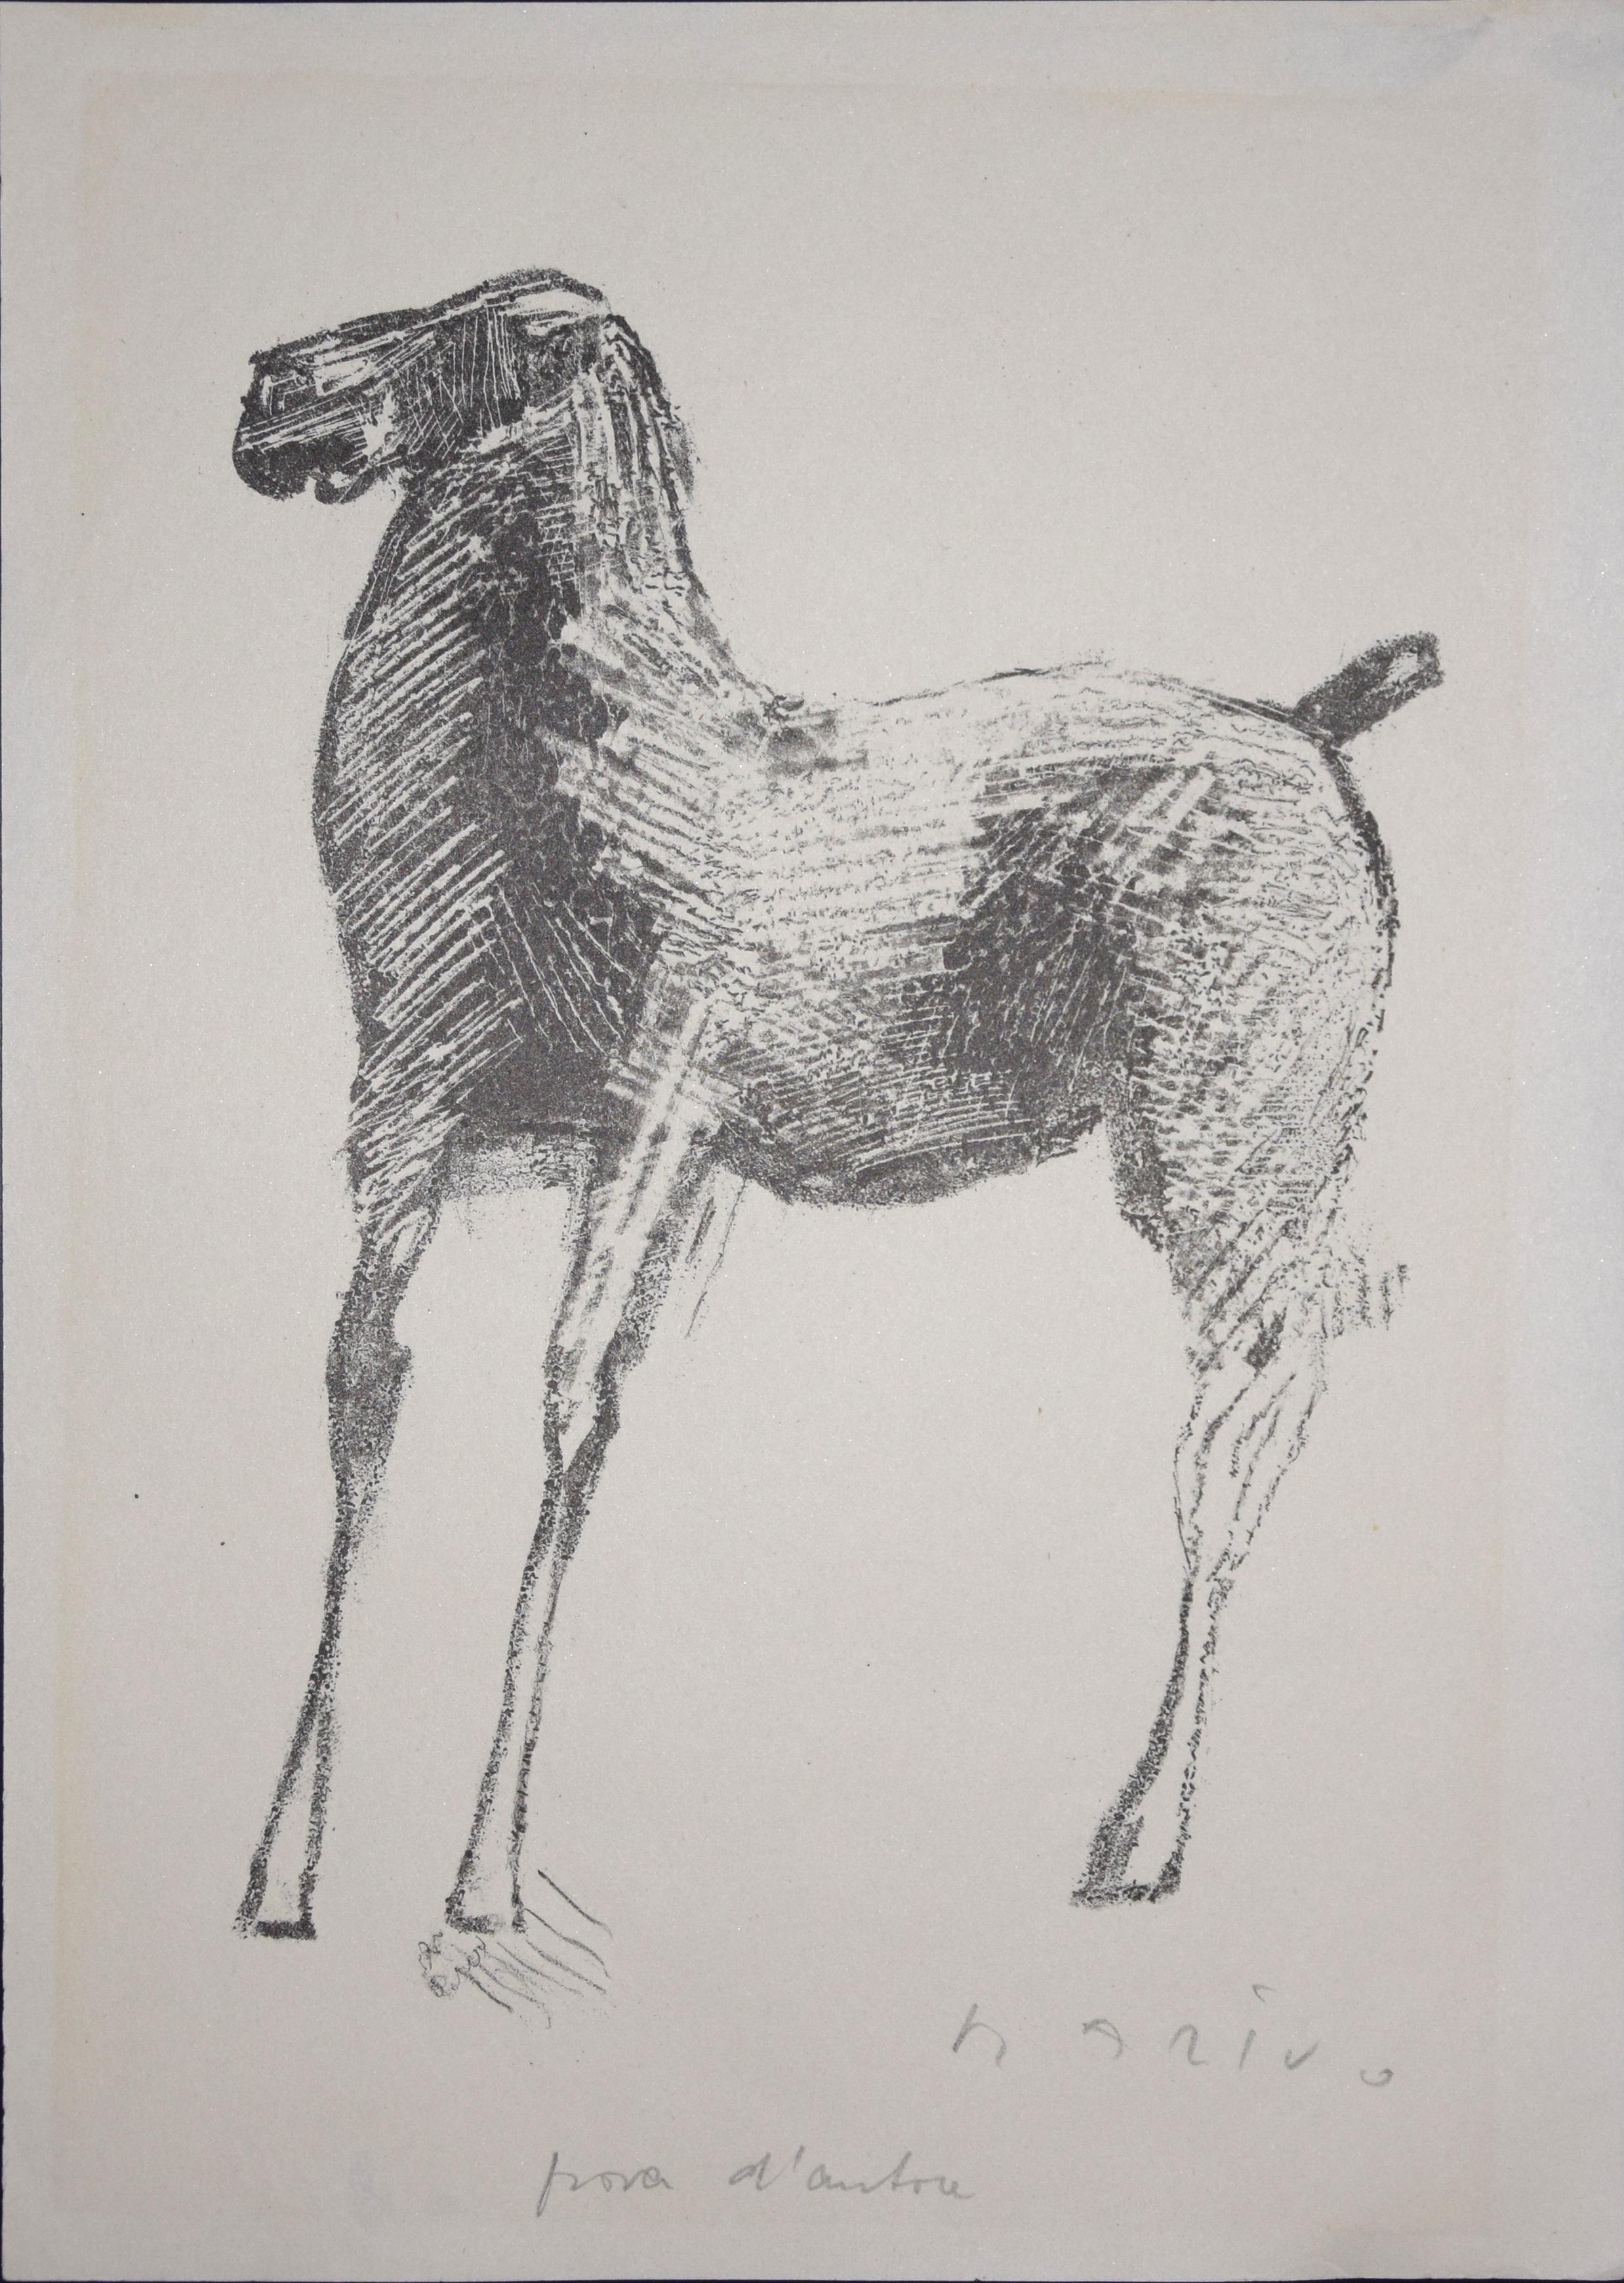 Marino Marini Print - Horse-1 - Rare Original Lithograph - 1948